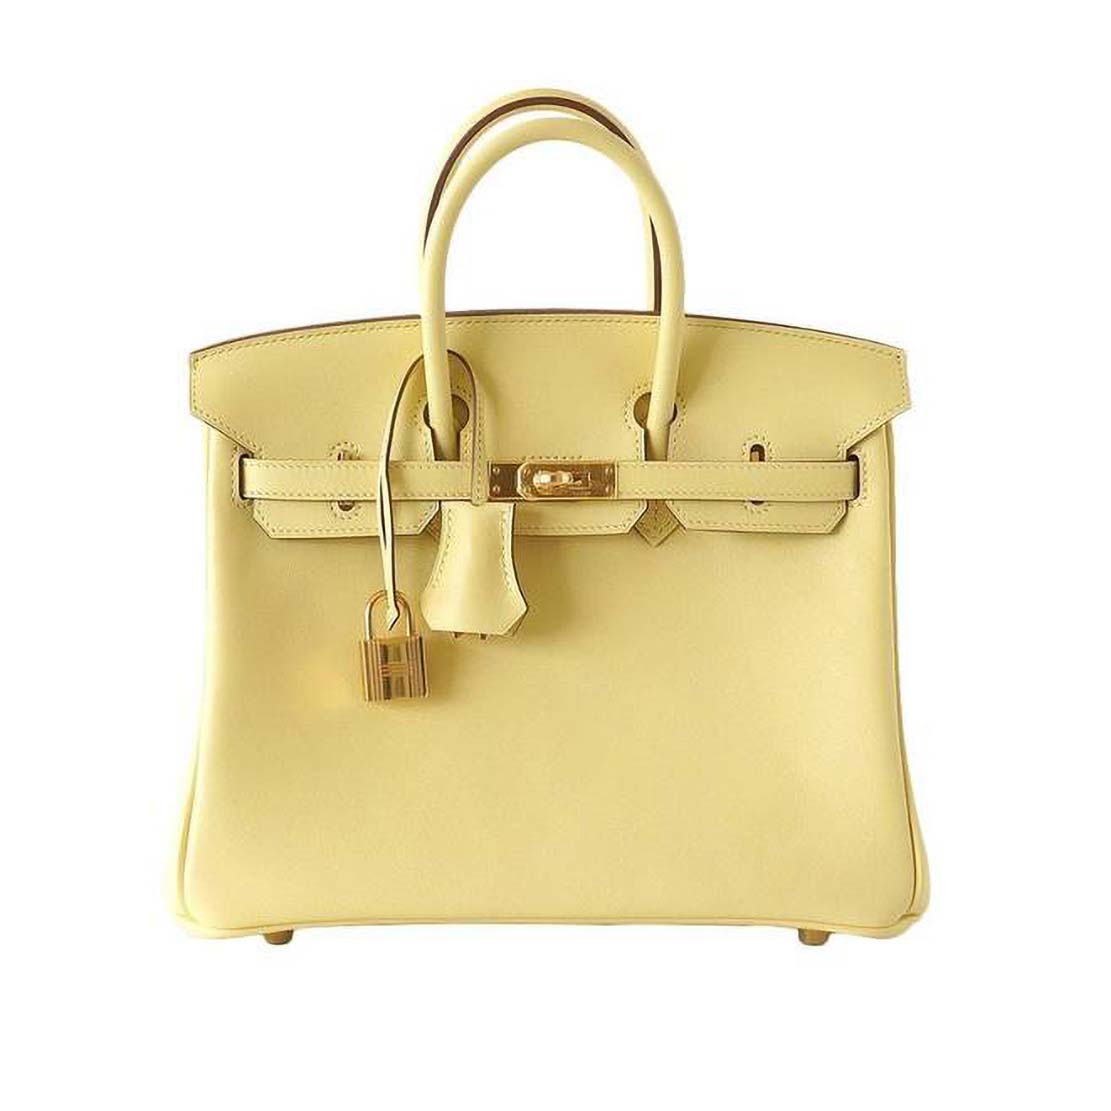 Hermes Birkin 25 Bag in Togo Leather with Gold Hardware